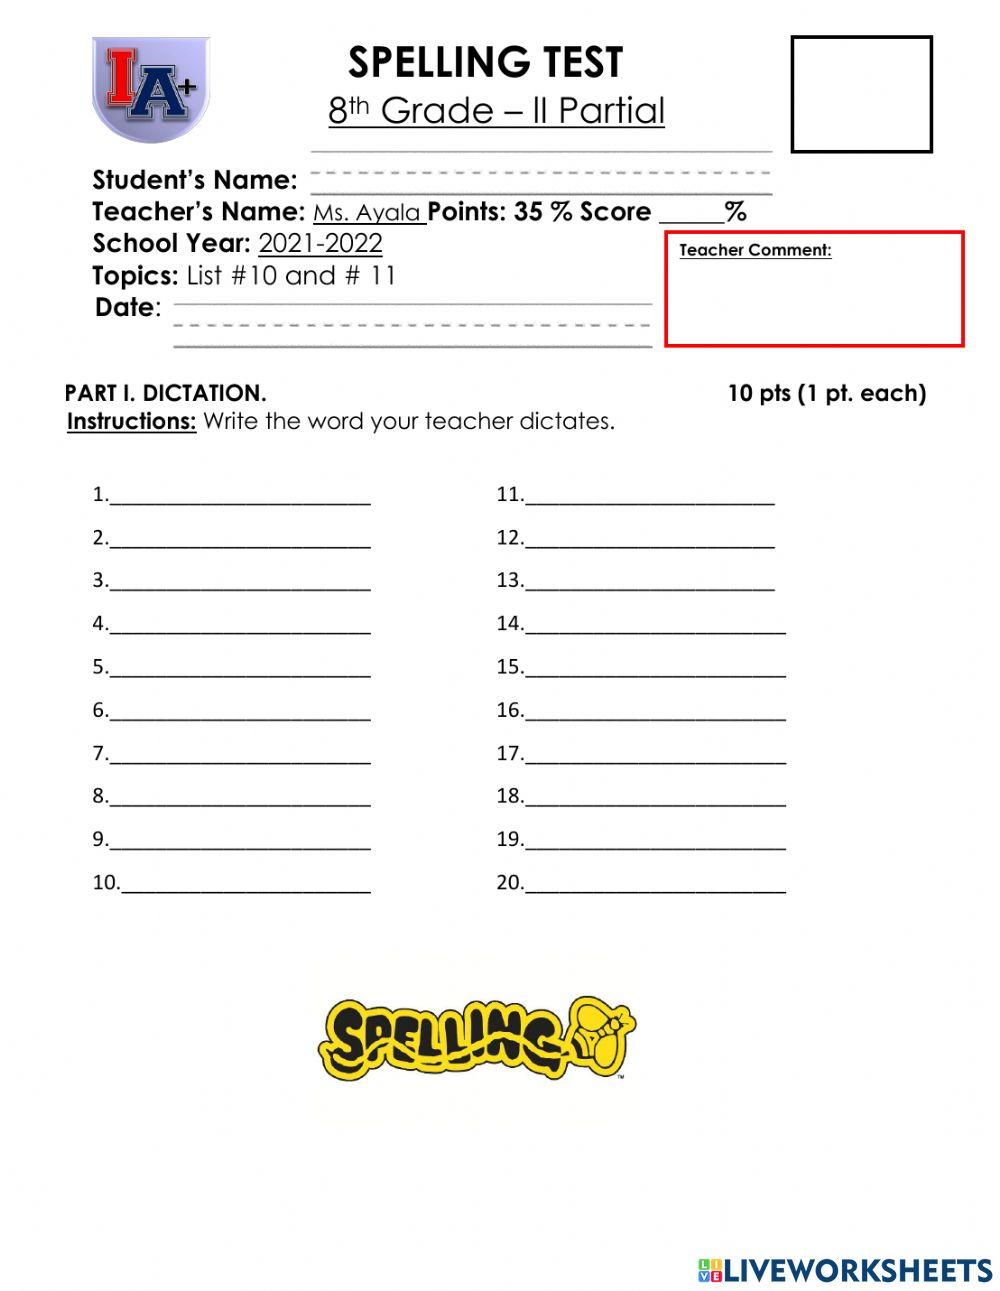 8th grade spelling test iip